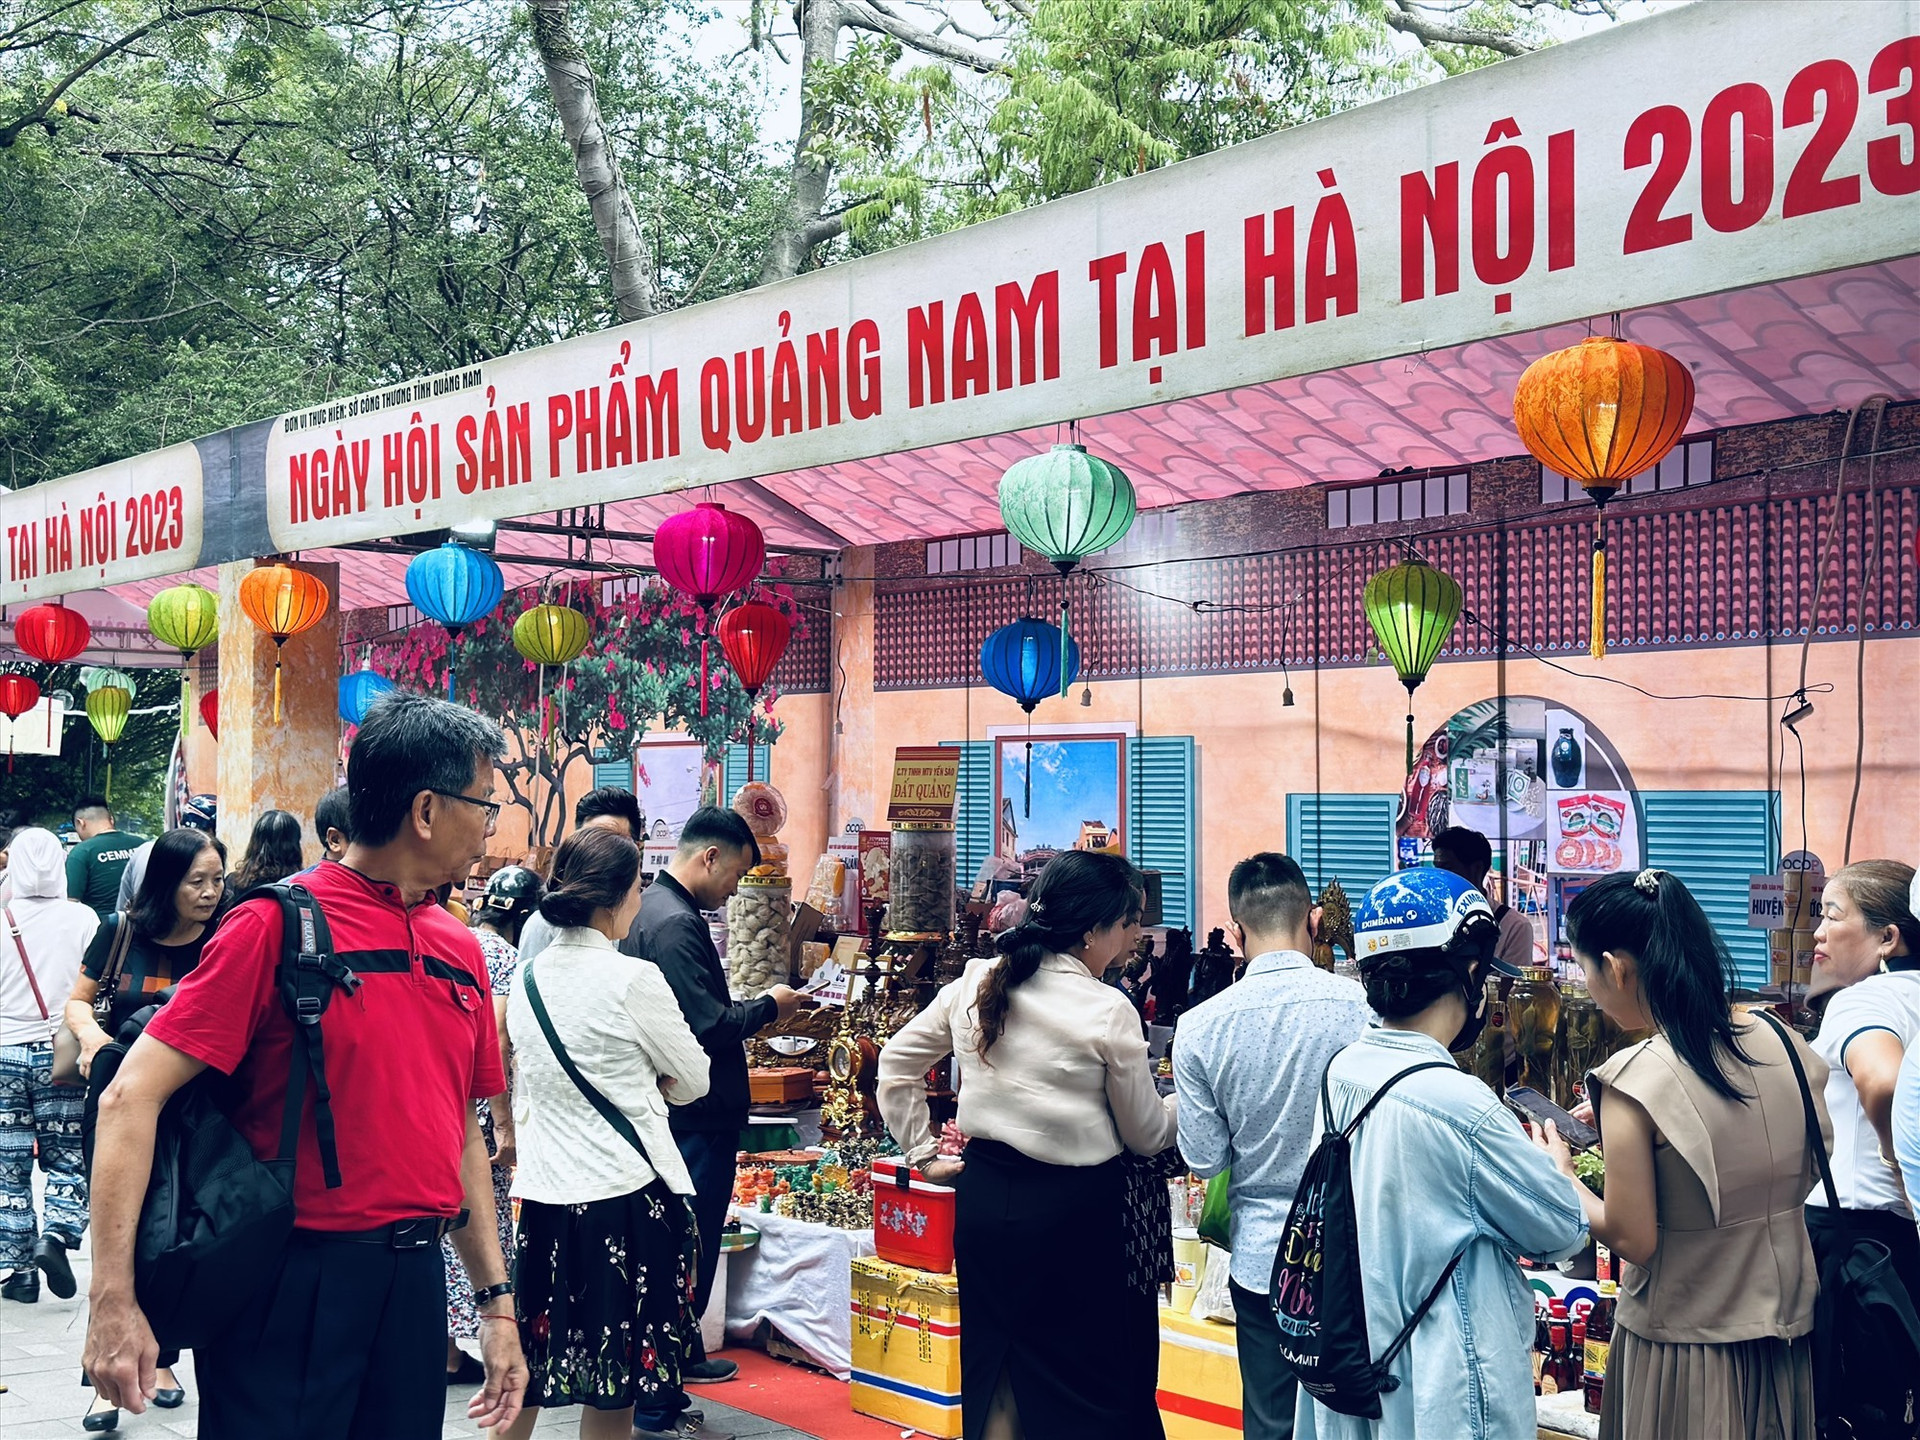 The festival takes place on Hoan Kiem Lake walking street (Hoan Kiem district, Ha Noi city)